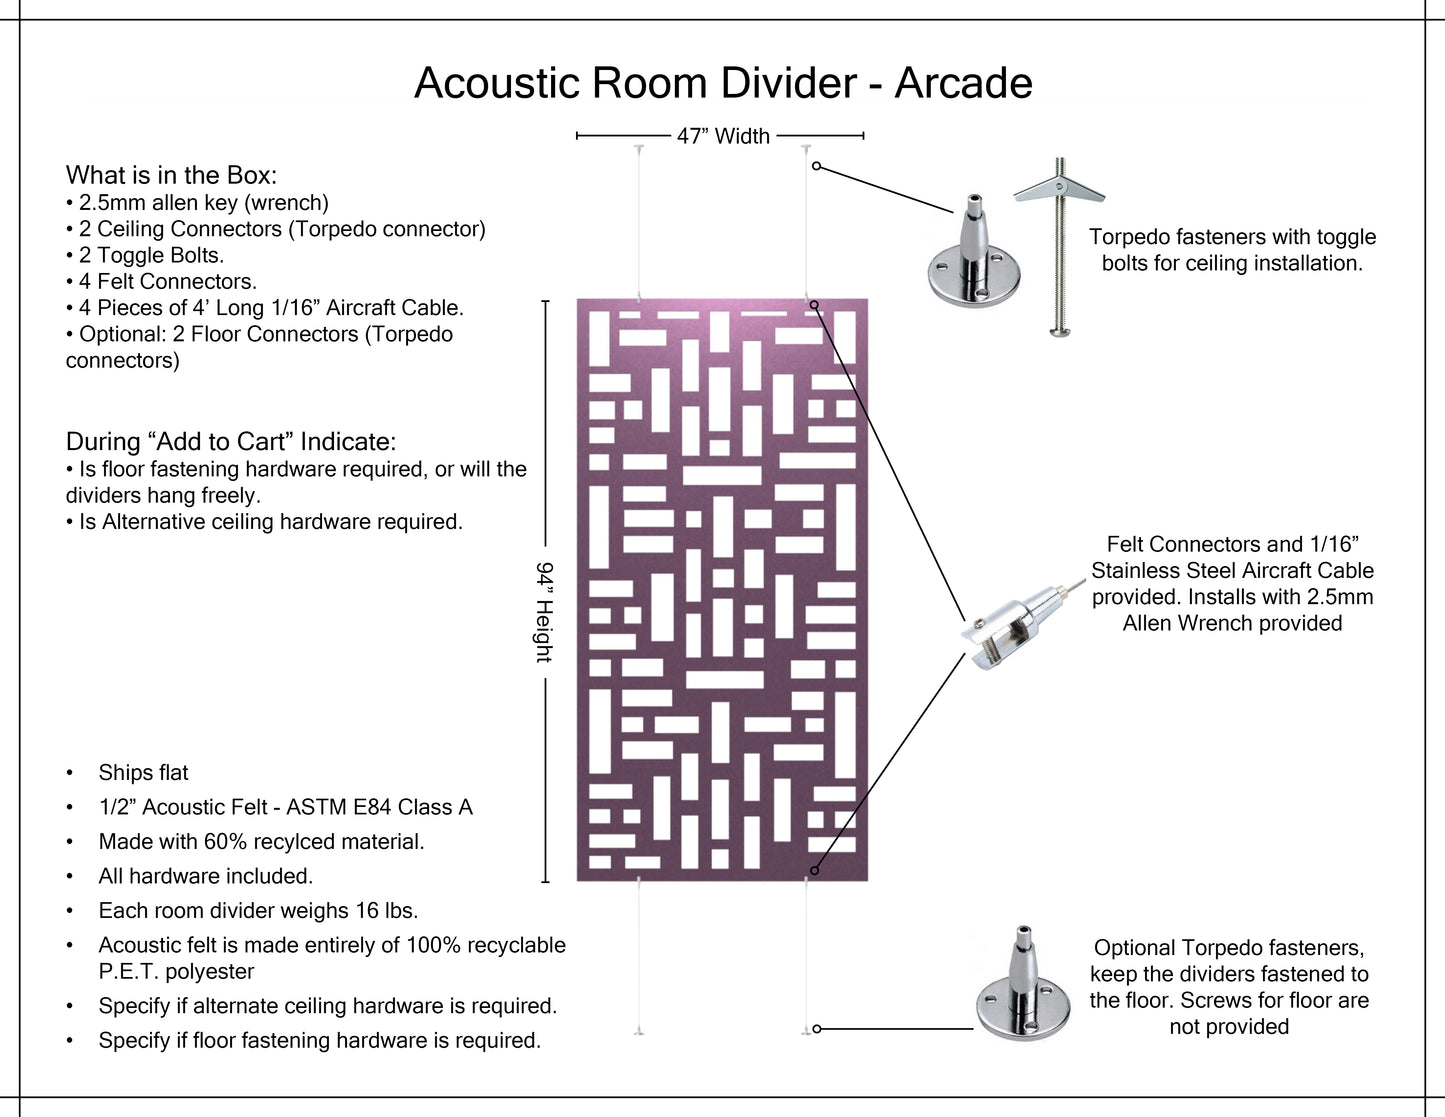 4x8 Acoustic Room Divider - Arcade